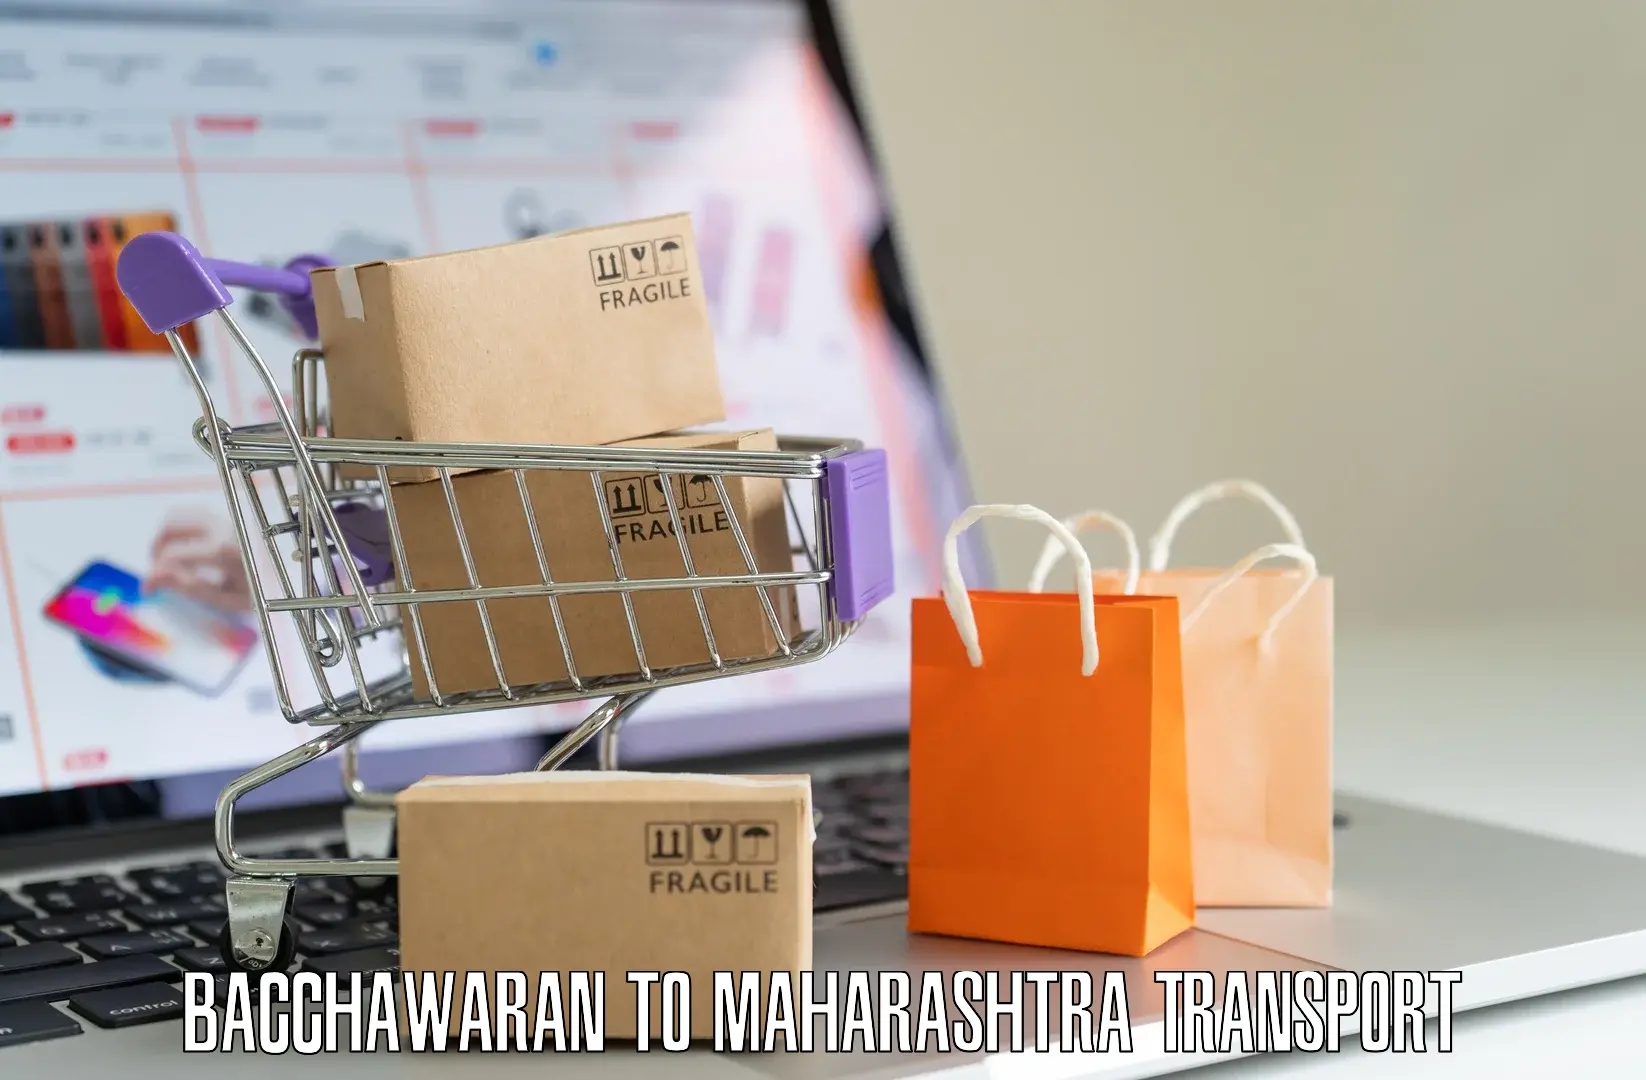 Daily parcel service transport Bacchawaran to Mumbai University